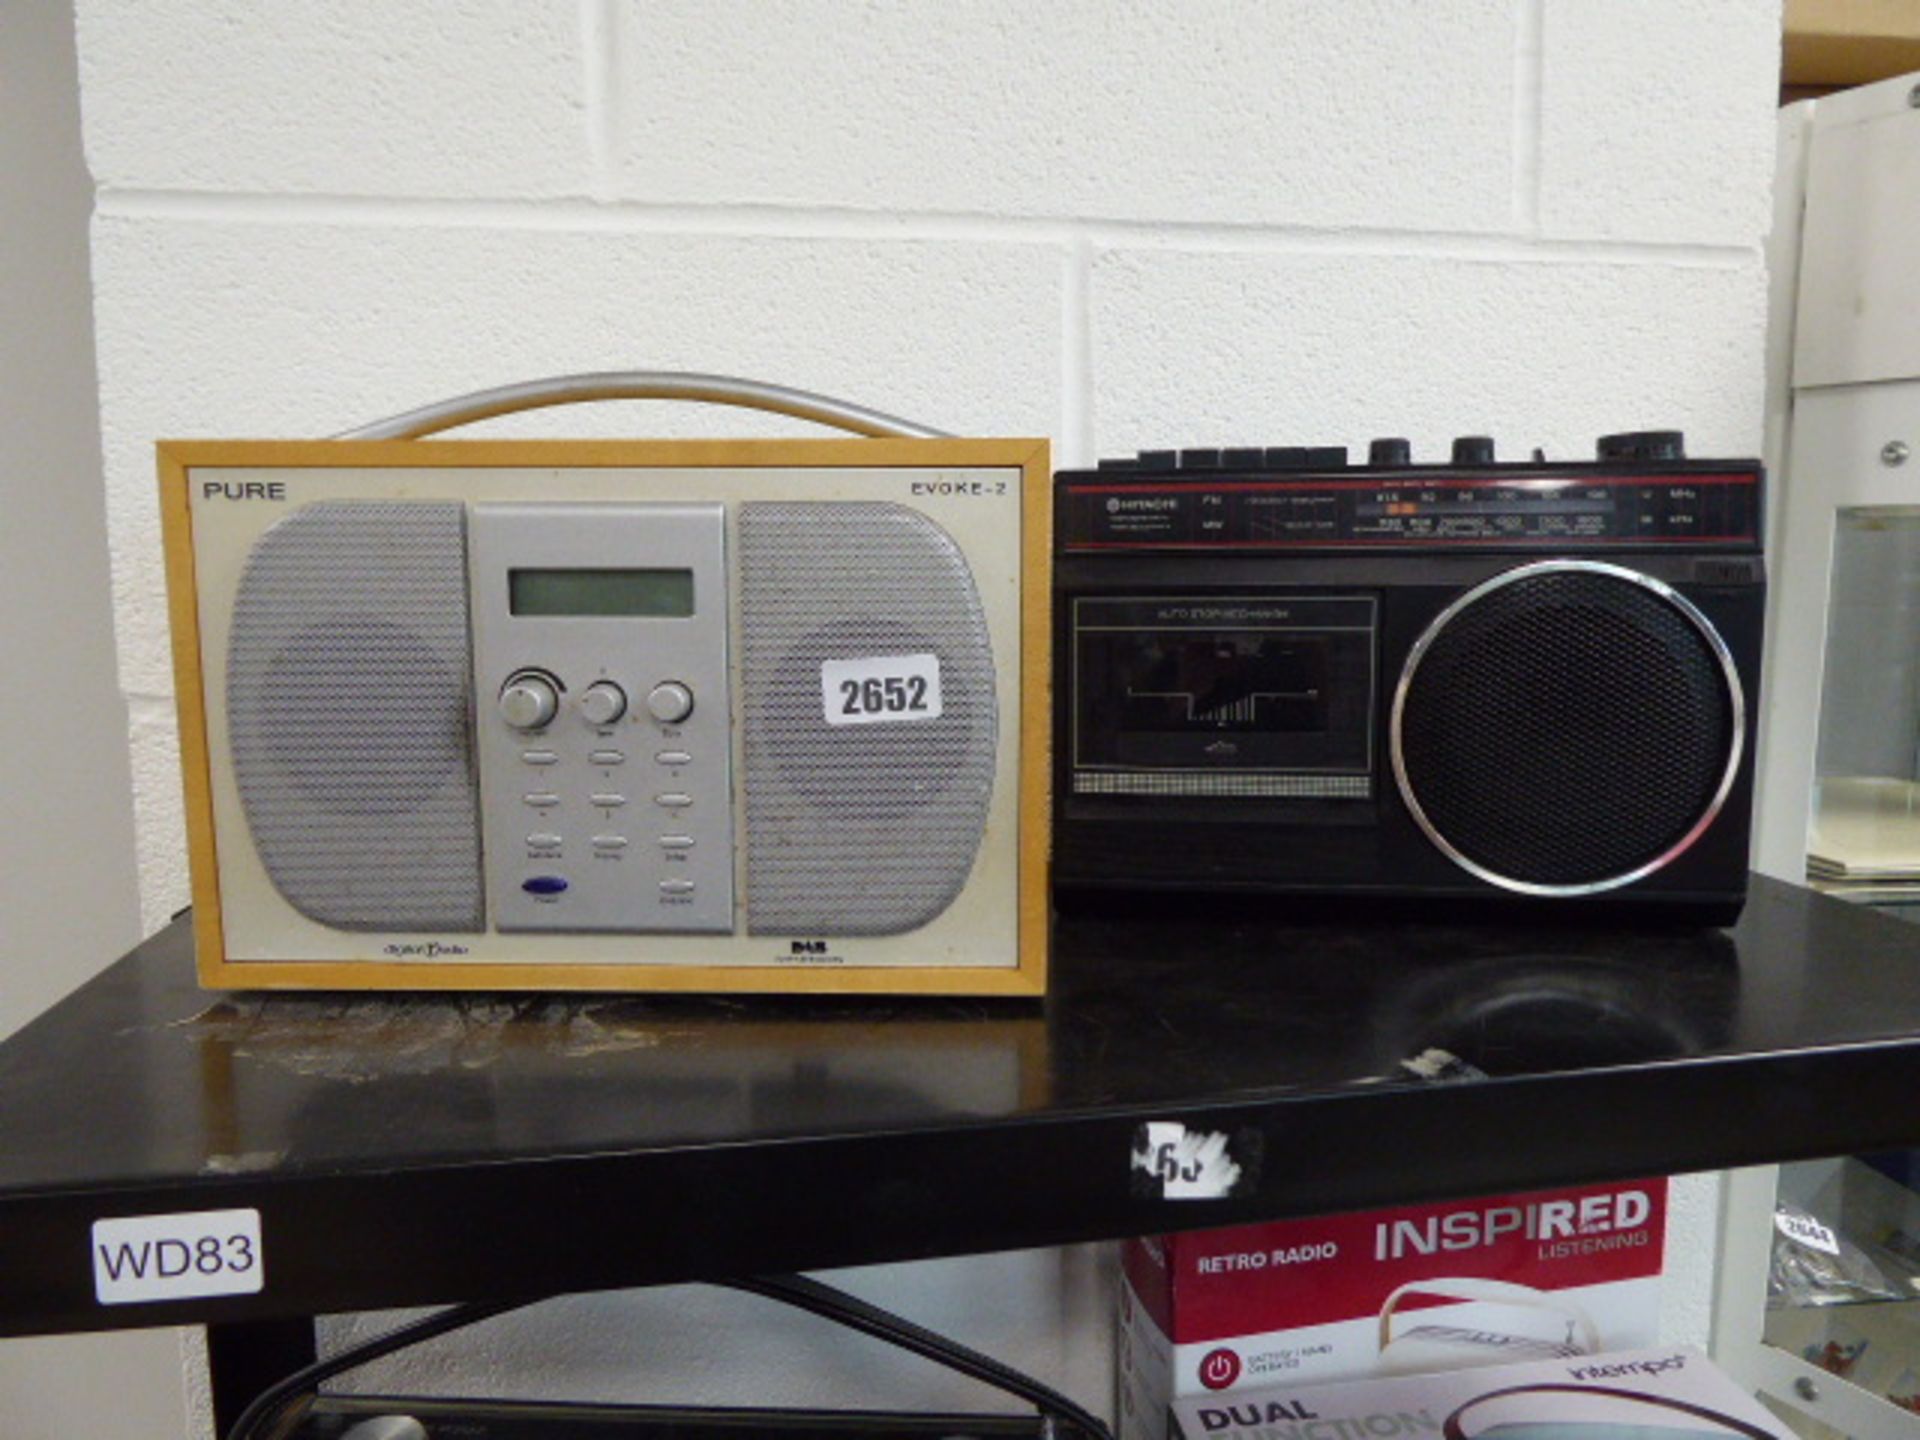 Pure Evoke 2 DAB radio together with analogue radio